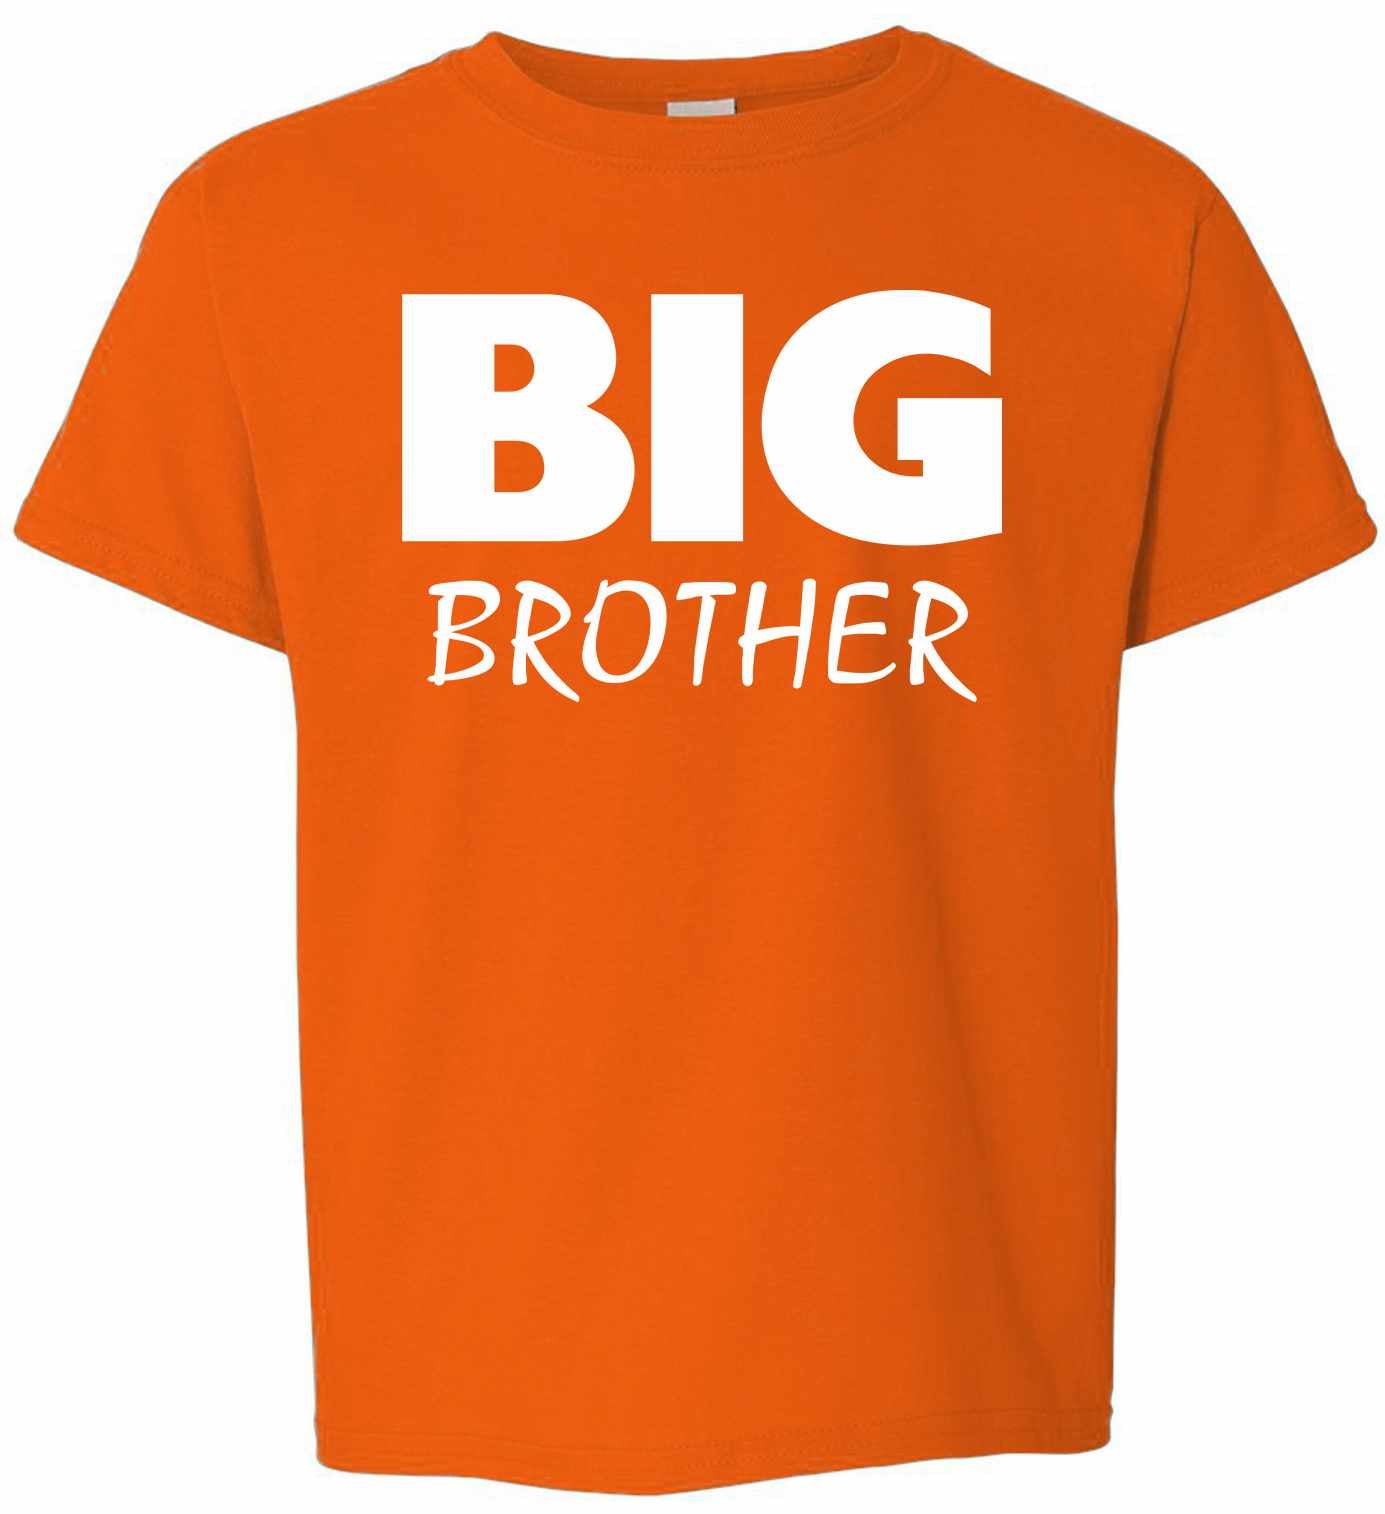 Big Brother on Kids T-Shirt (#953-201)